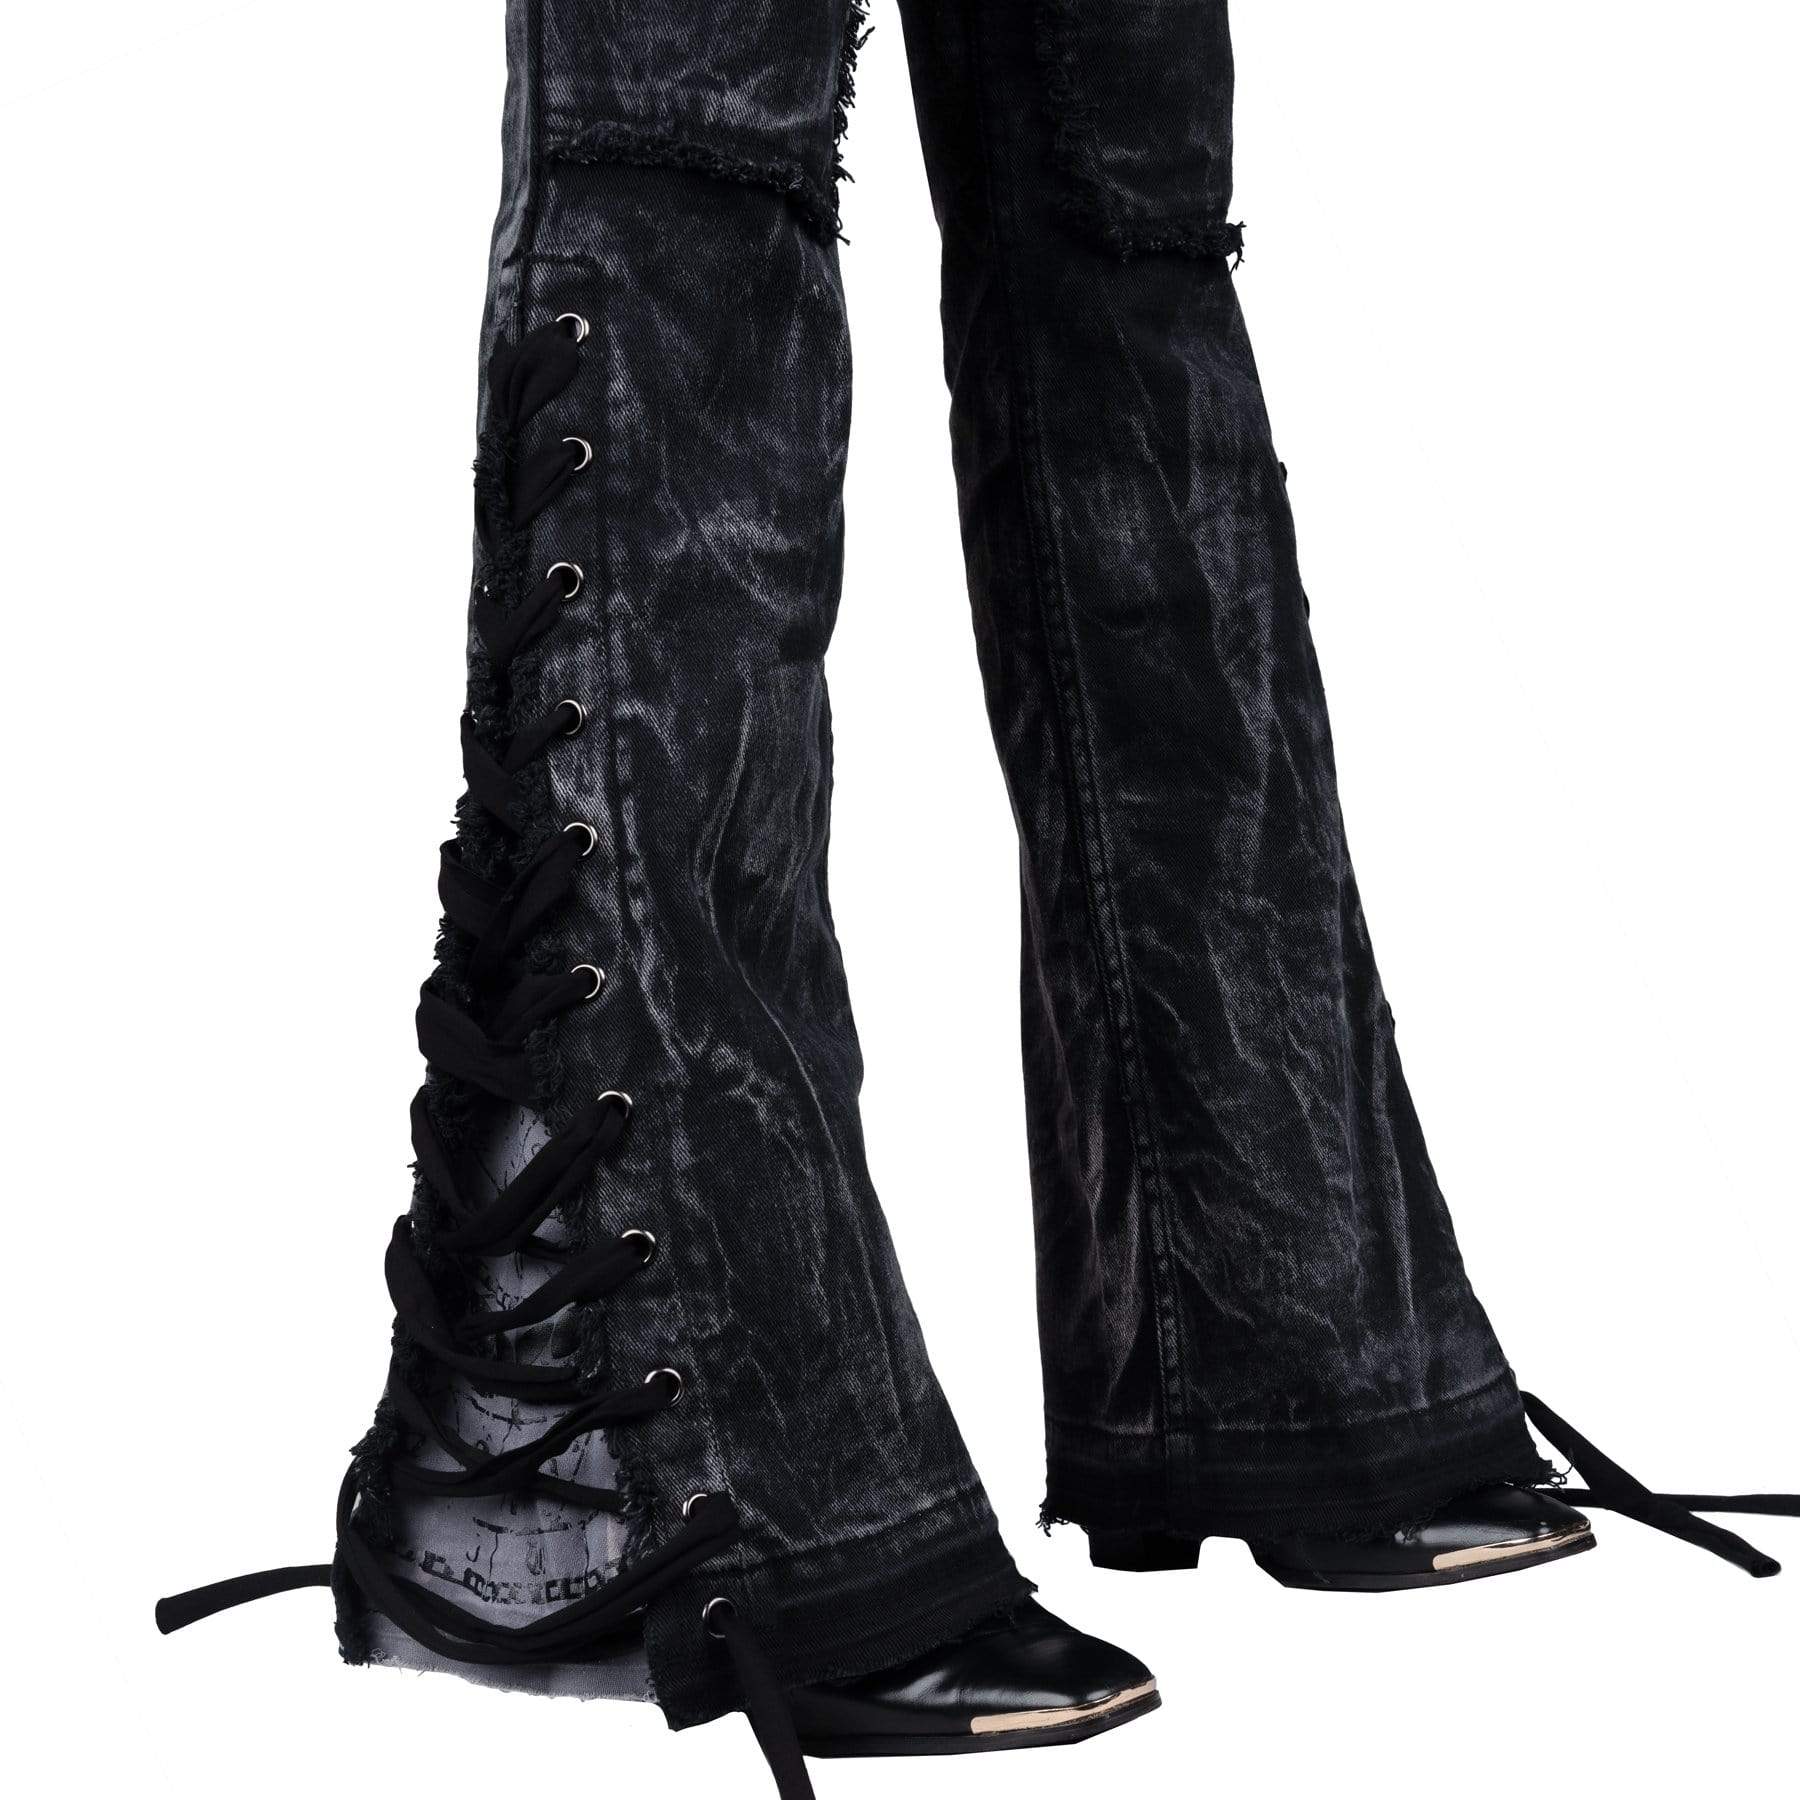 Wornstar Clothing Unisex Jeans. Cutlass Denim Stage Pants - Black